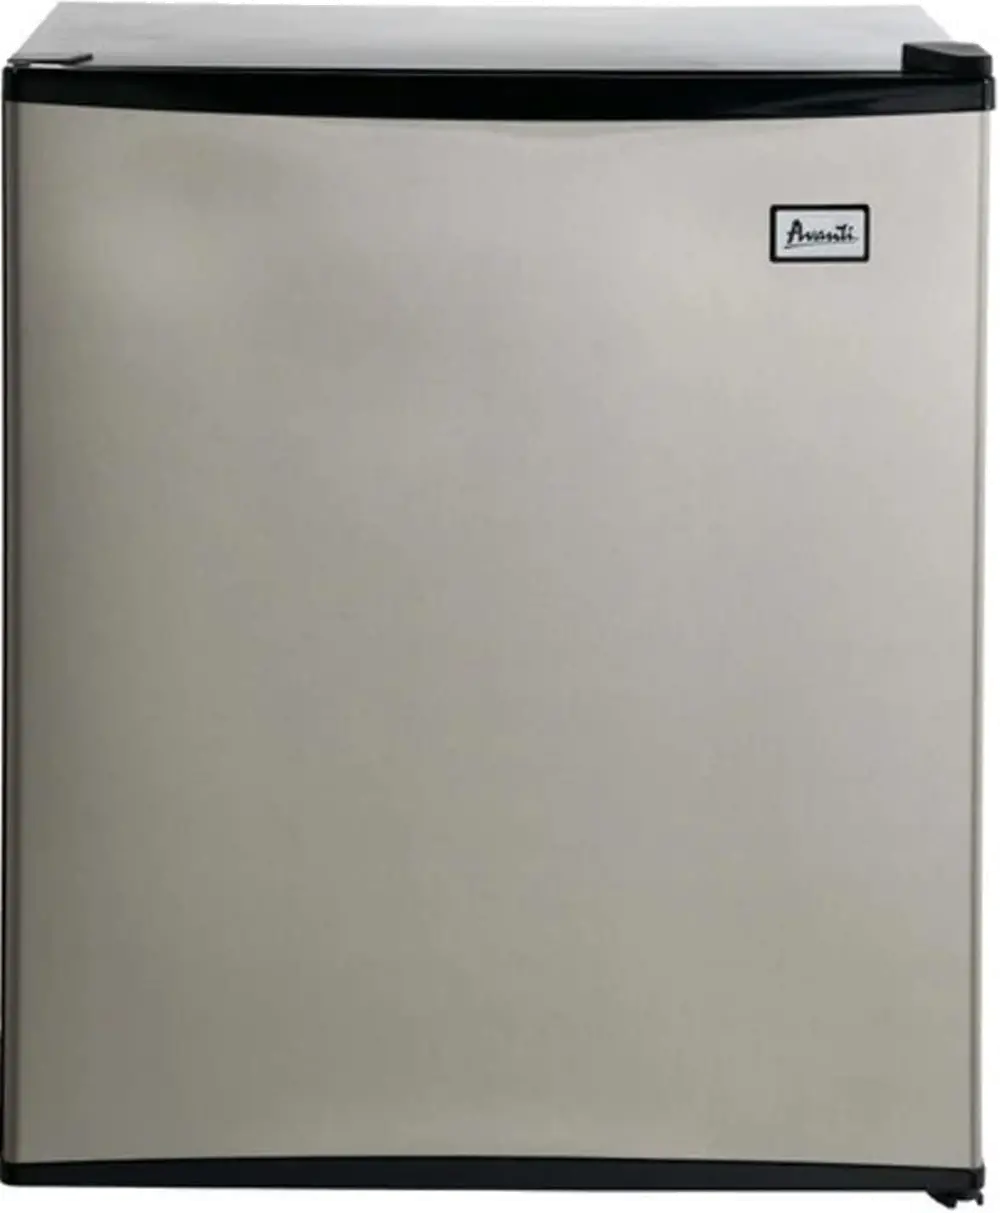 DCSR17N3S-IS Avanti 1.7 cu ft Compact Refrigerator - Stainless Steel-1